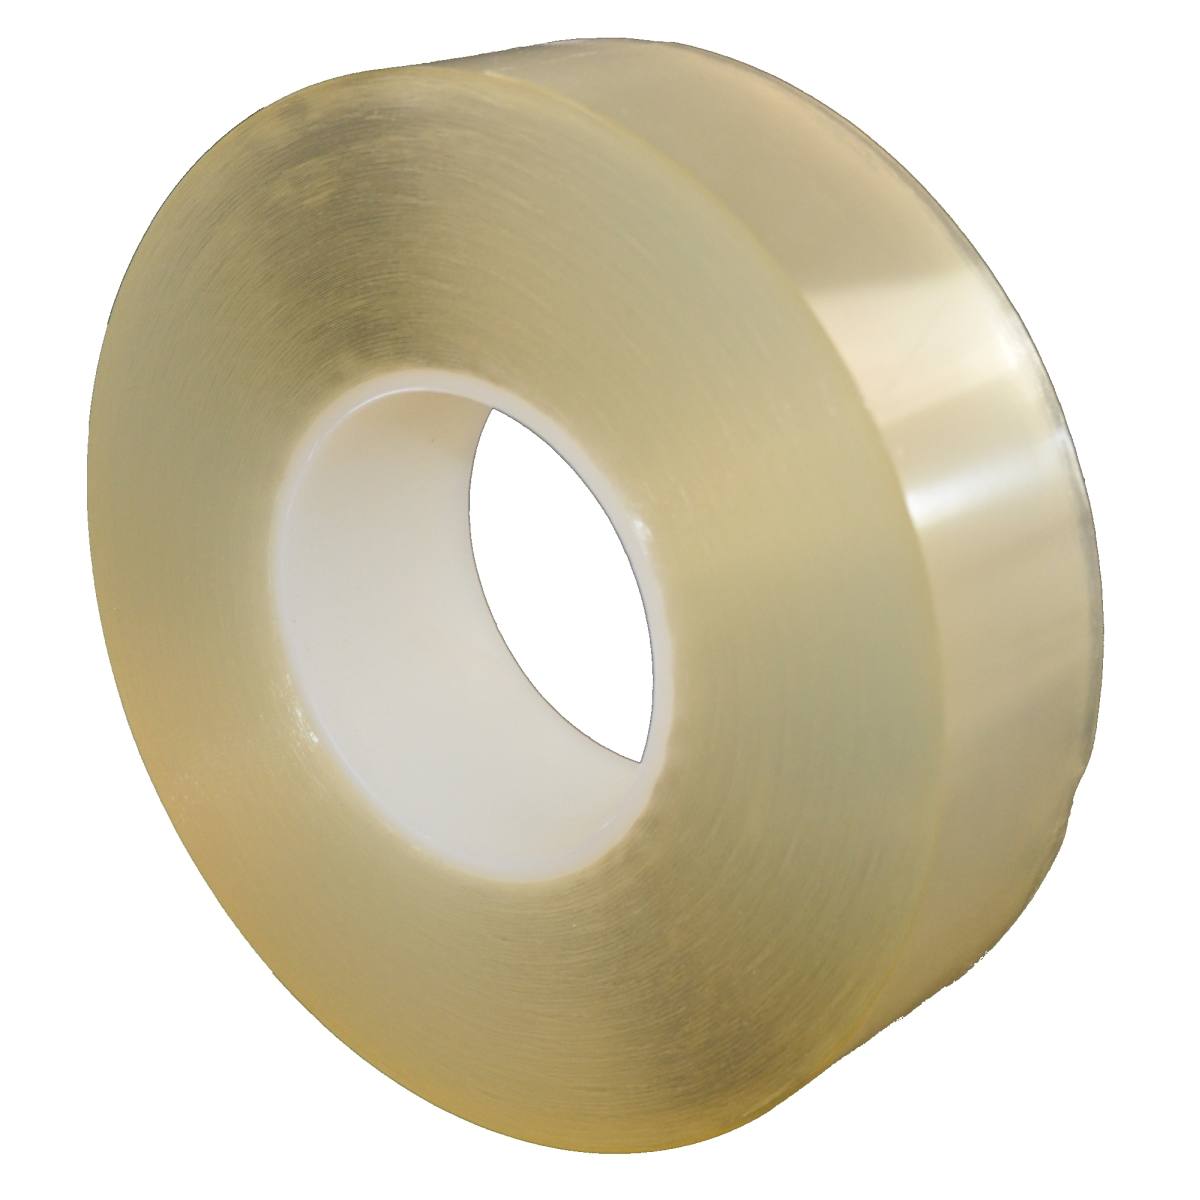 S-K-S transfer adhesive tape 2283 LE20, transparent, 19 mm x 50 m, 0.30 mm